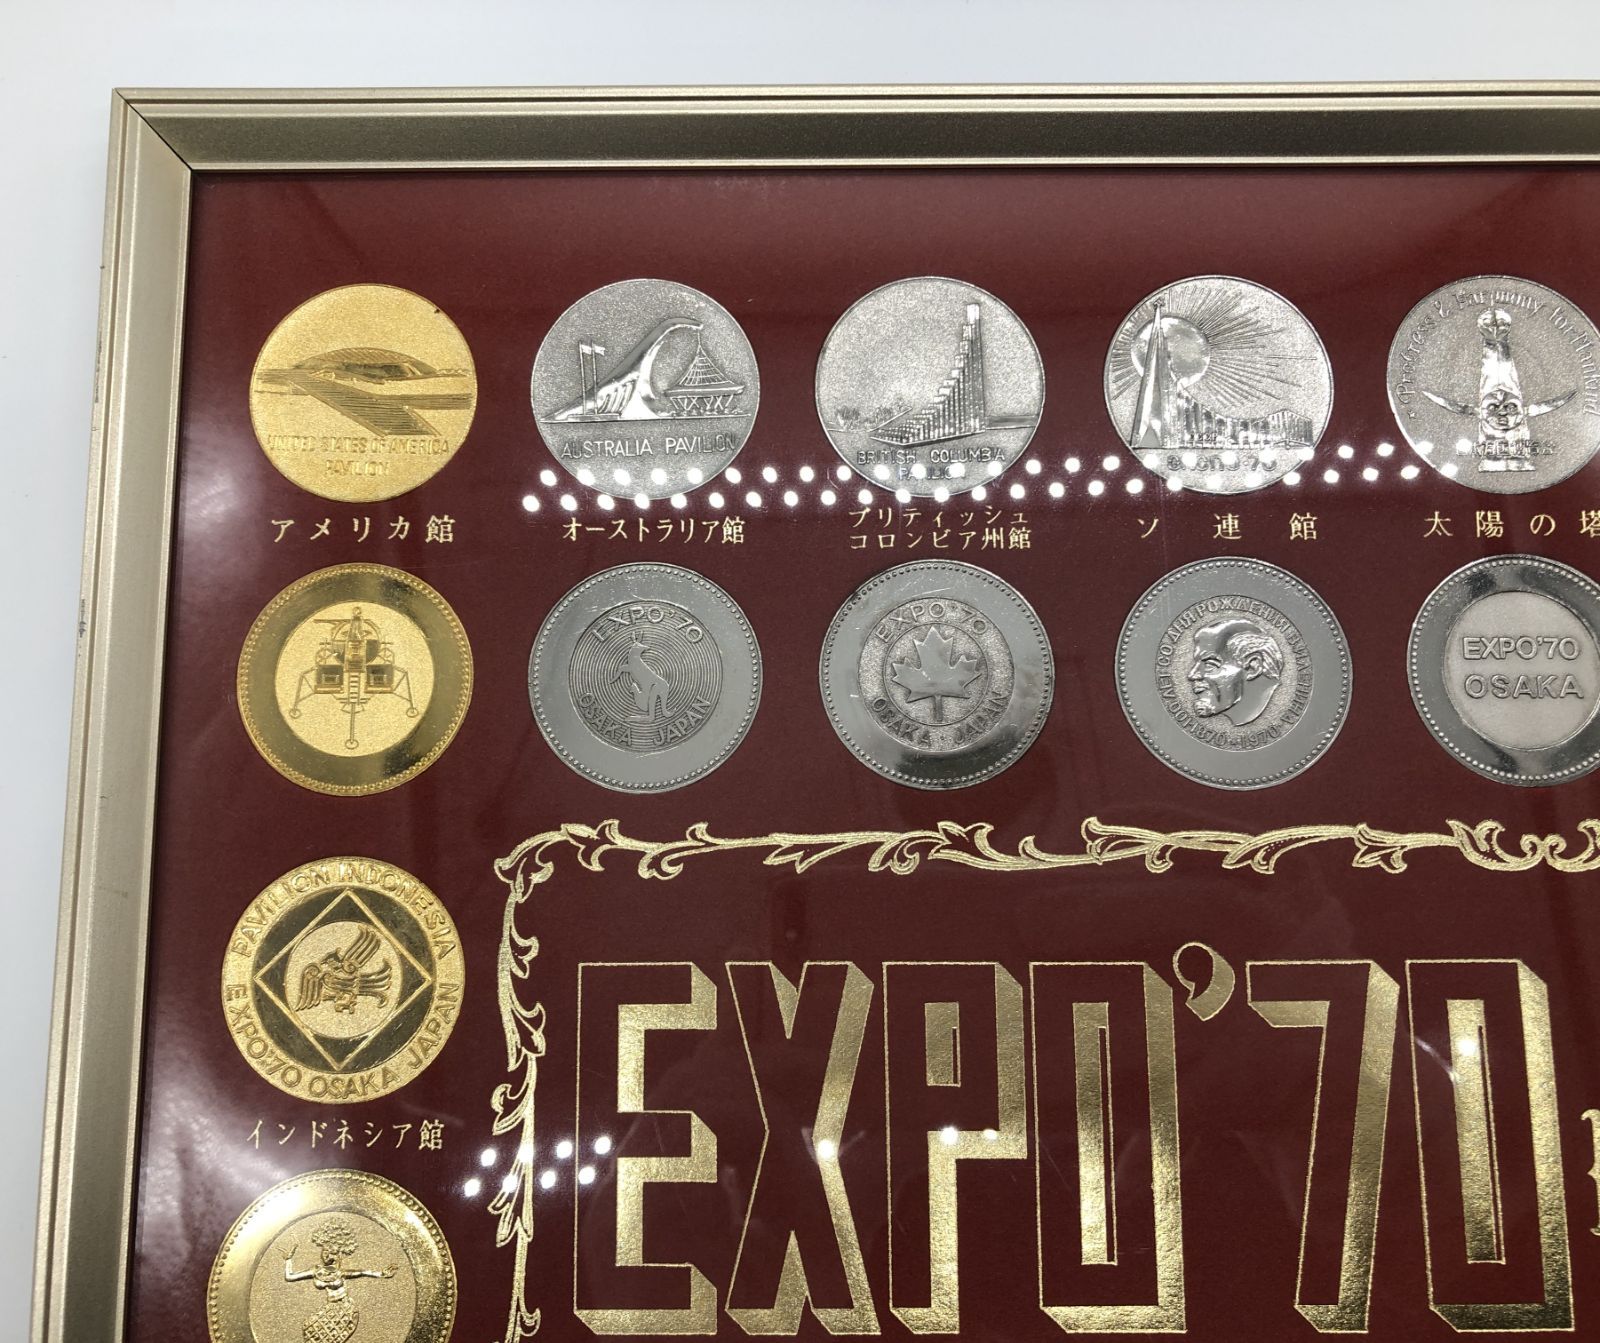 EXPO'70 日本万国博覧会 パビリオン観覧記念メダル | nate-hospital.com